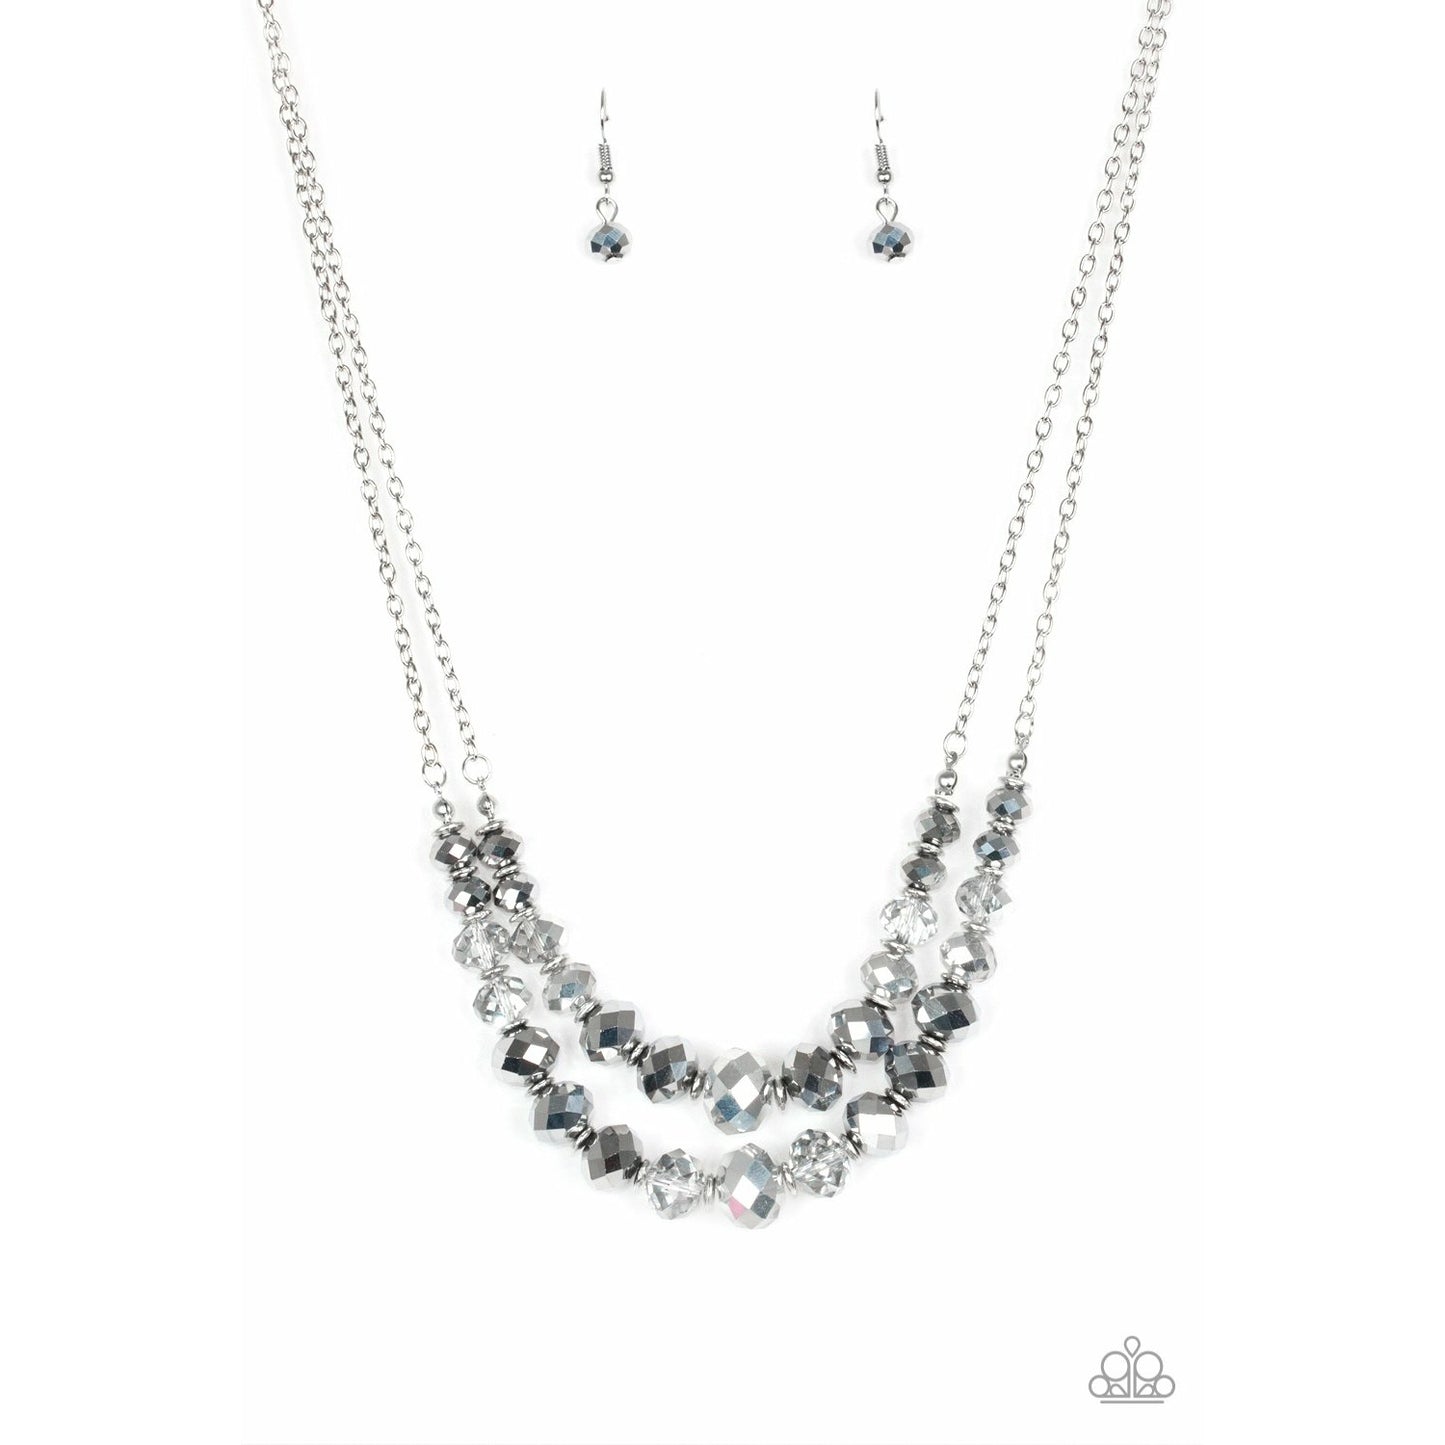 Strikingly Spellbinding - Silver necklace